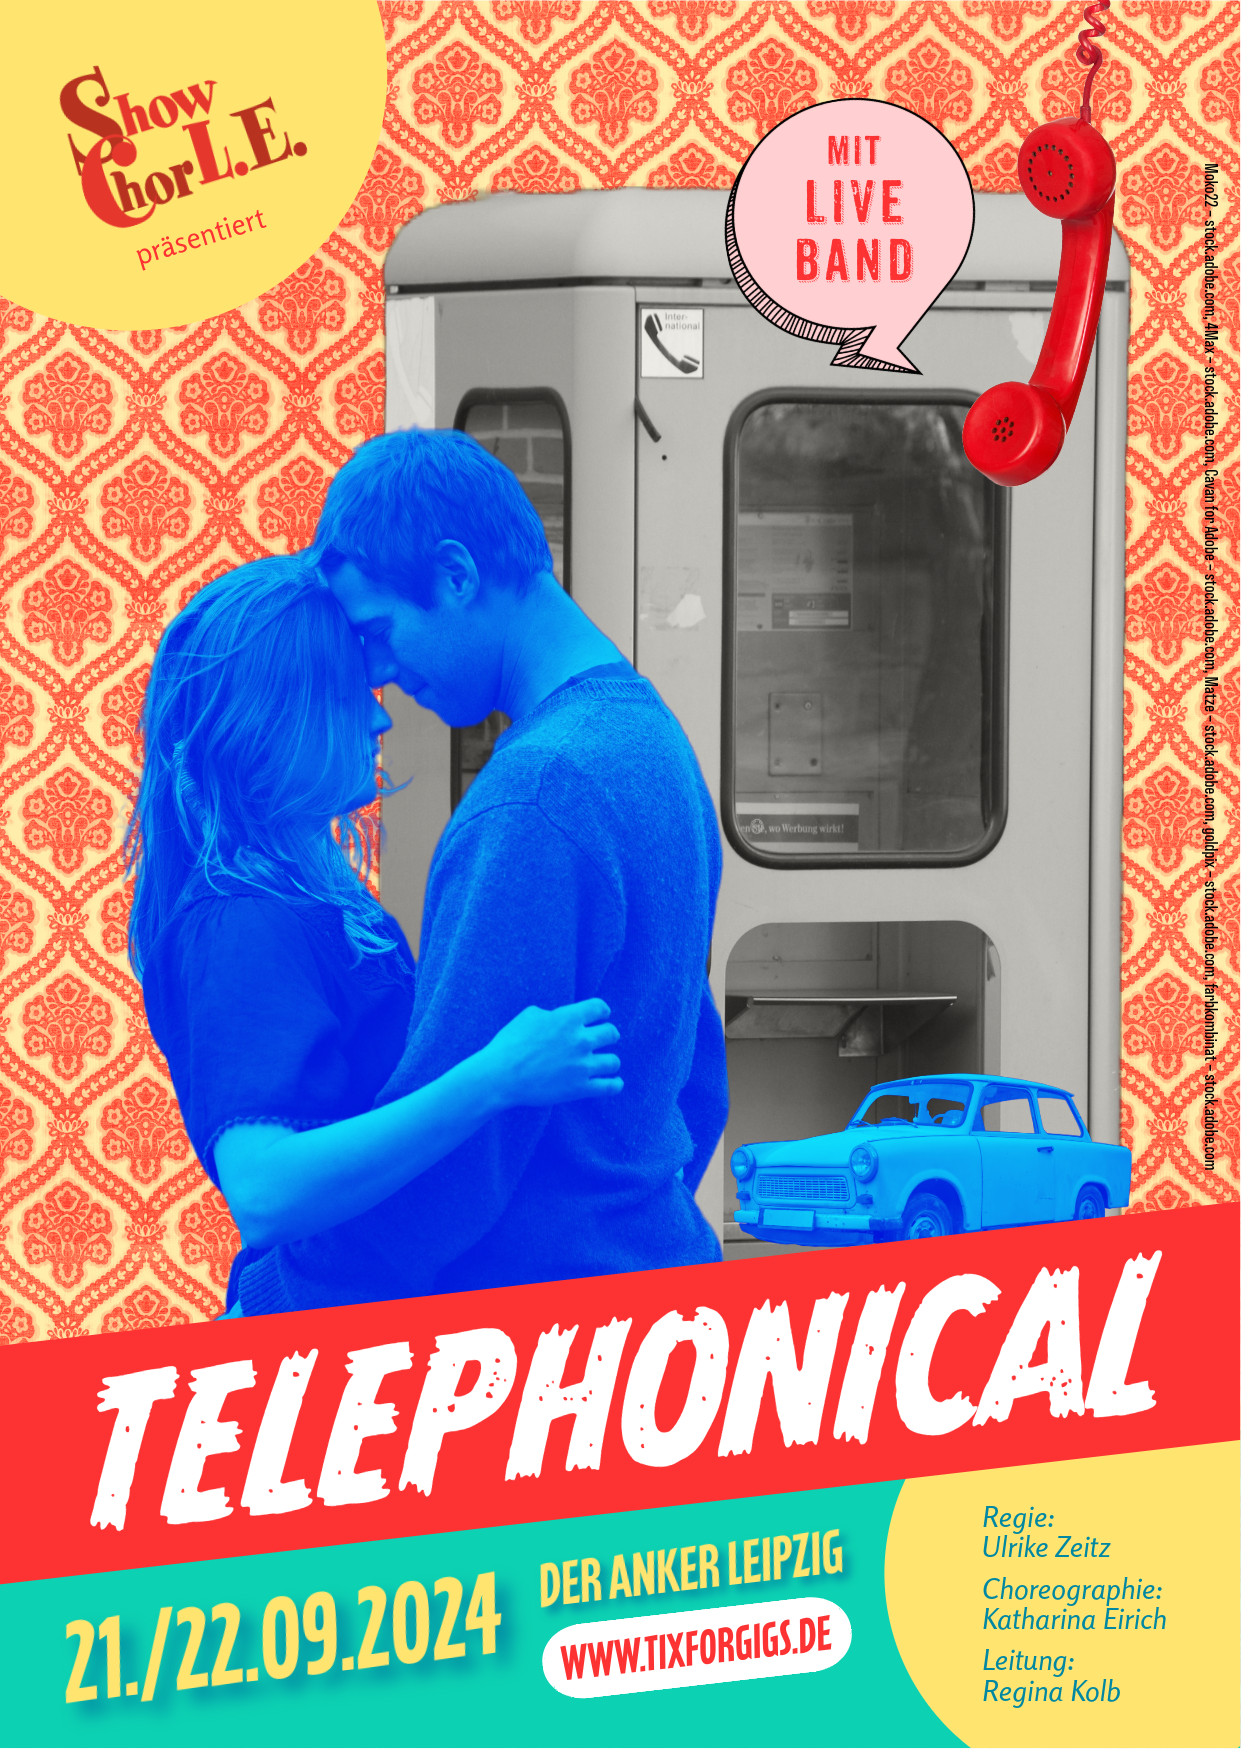 Telephonical – die neue Show des ShowChor L.E.